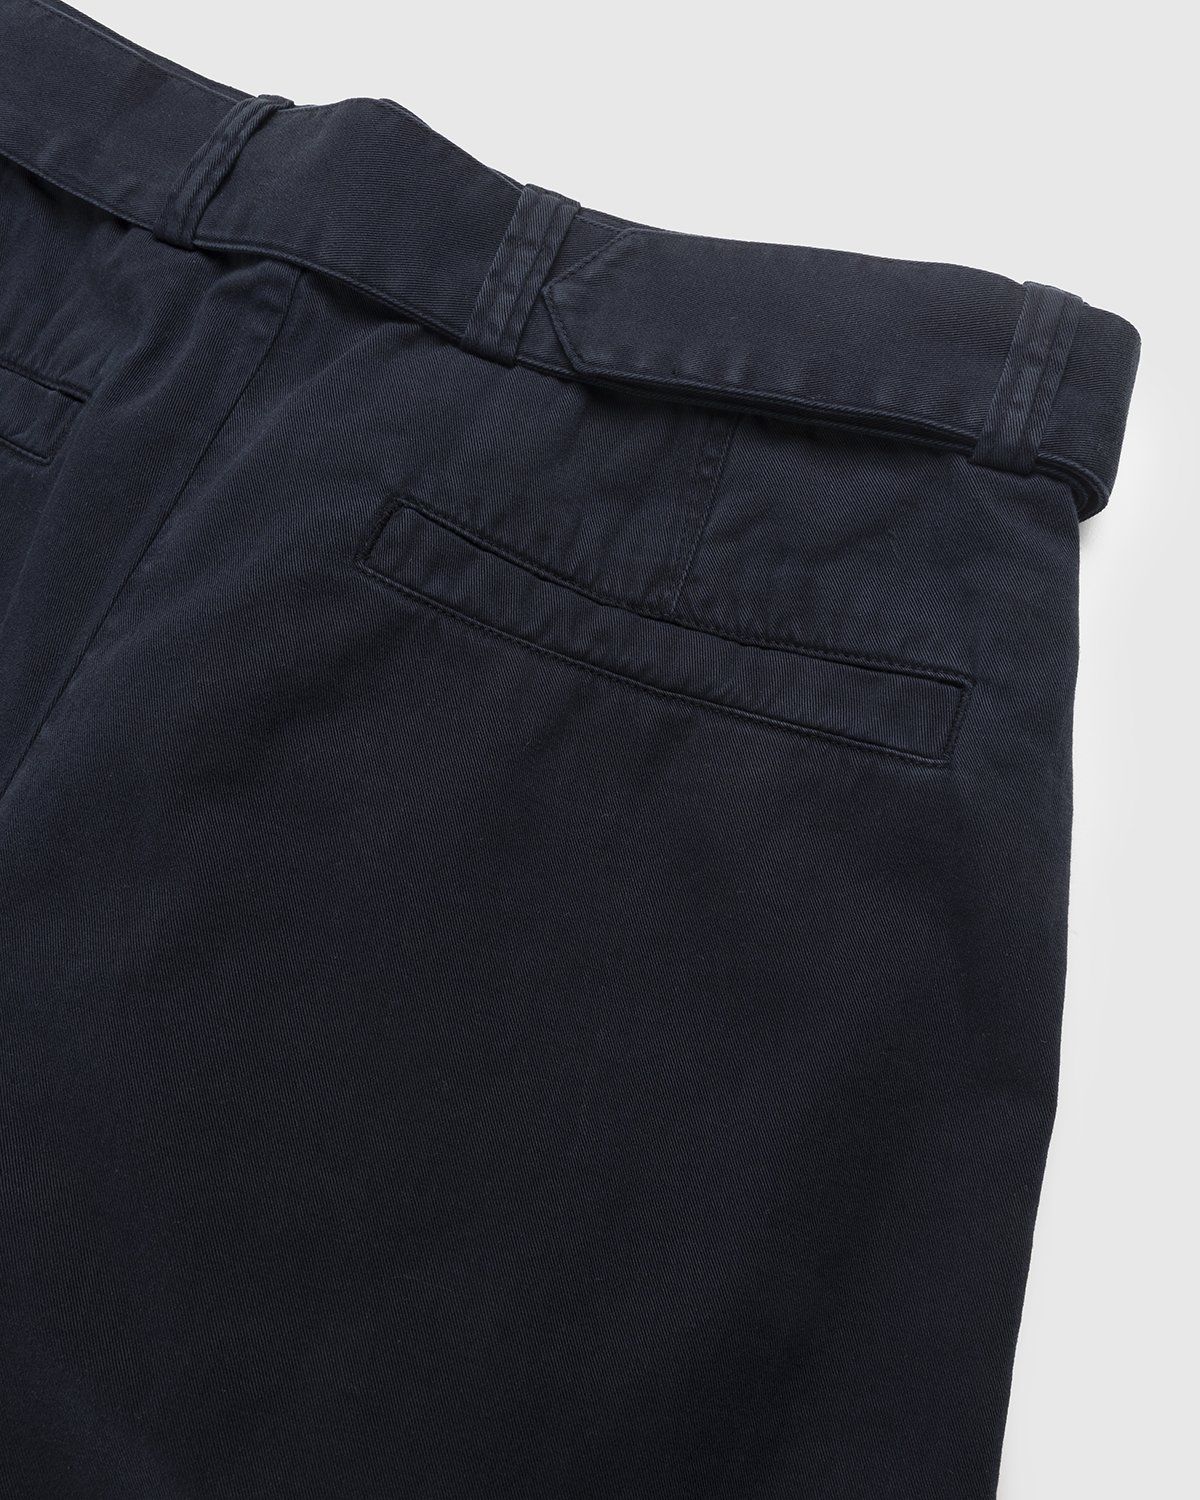 Dries van Noten – Penson Pants Navy - Trousers - Blue - Image 3